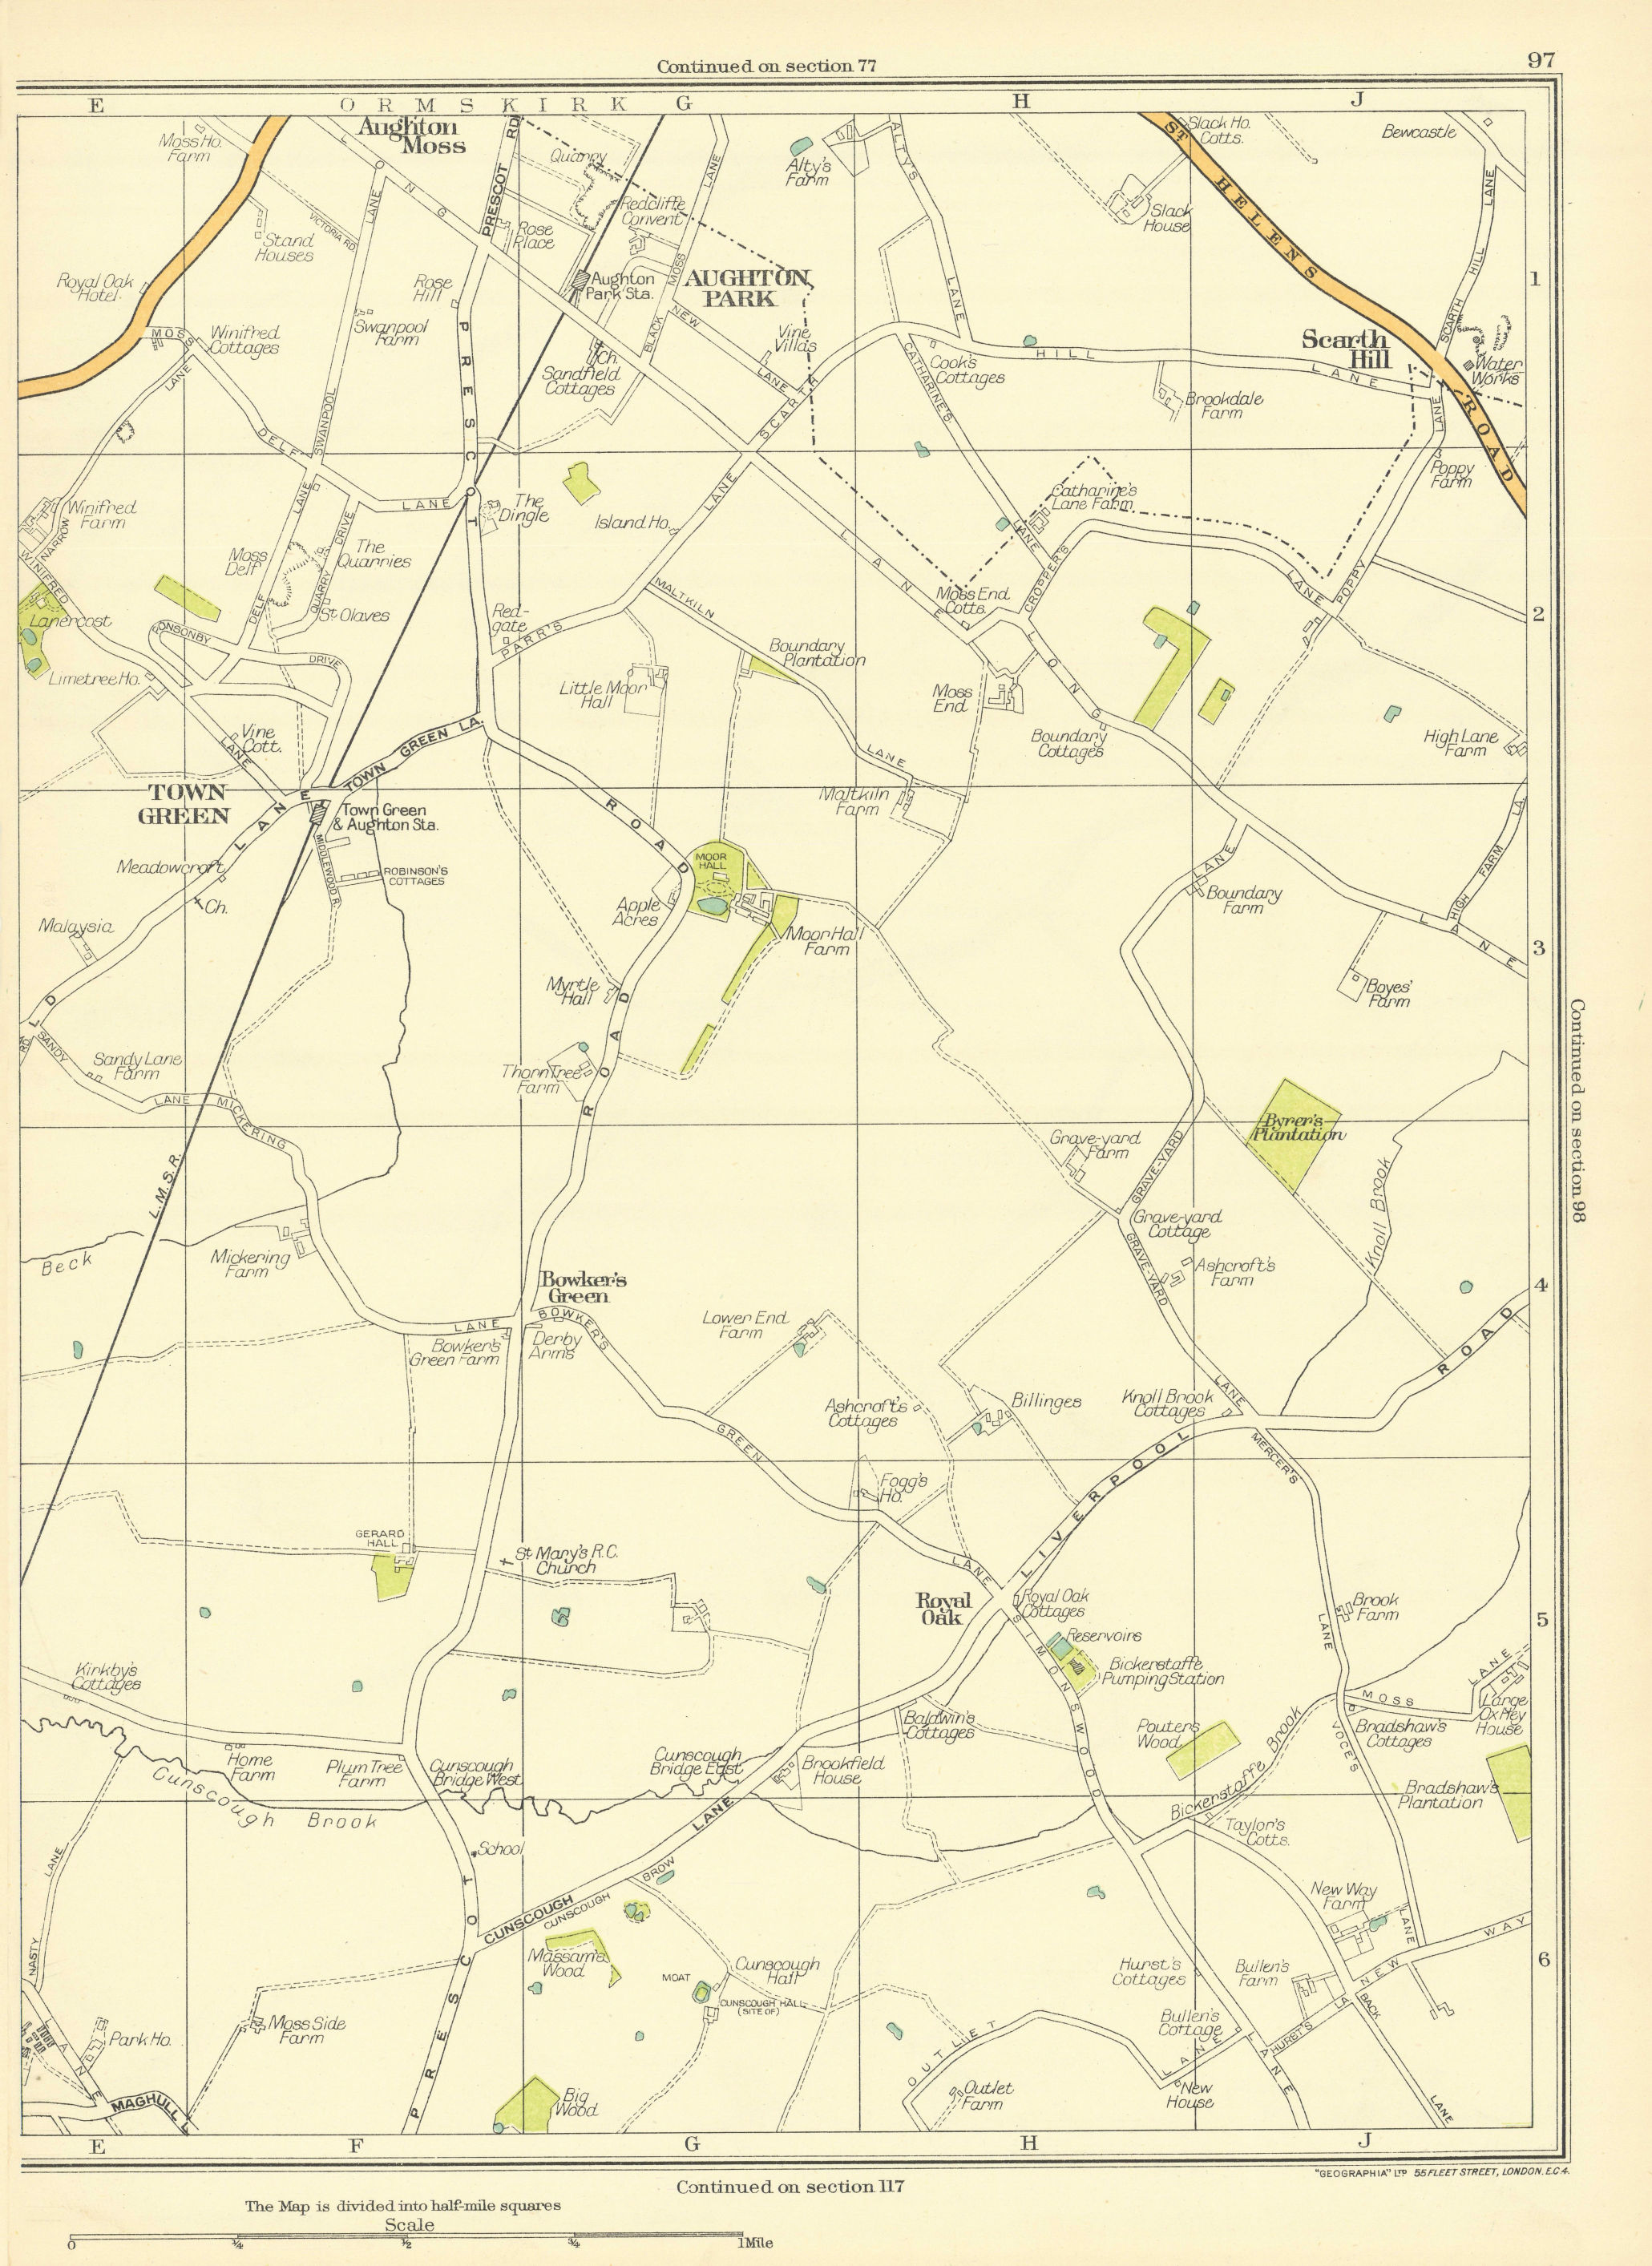 LANCASHIRE Town Green Aughton Park Scarth Hill Royal Oak Bowker's Green 1935 map